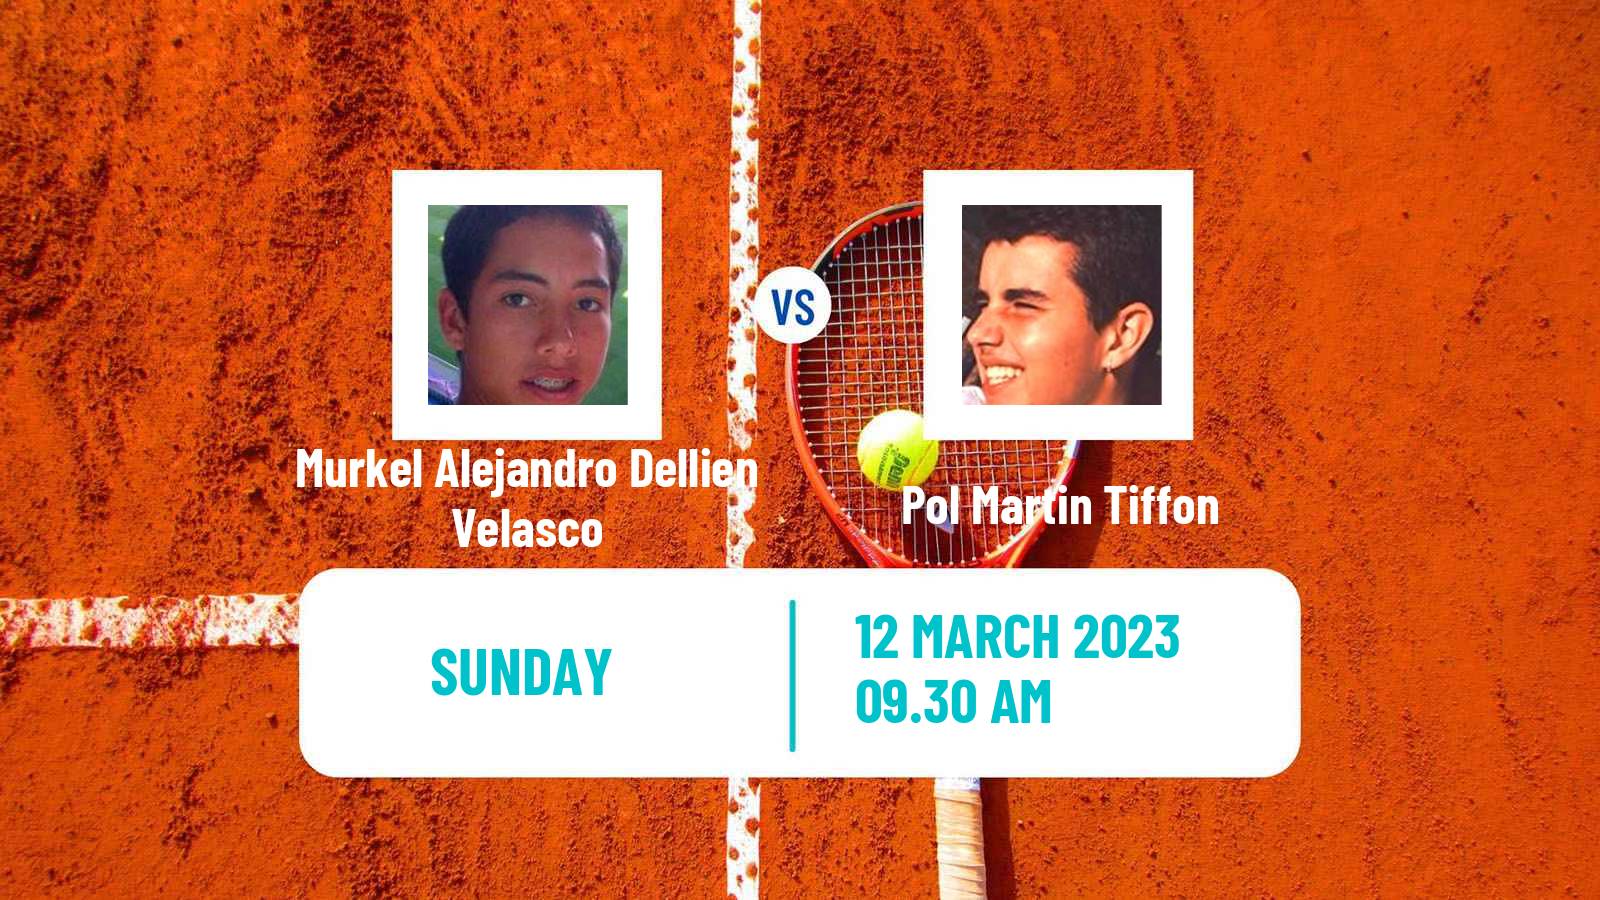 Tennis ITF Tournaments Murkel Alejandro Dellien Velasco - Pol Martin Tiffon